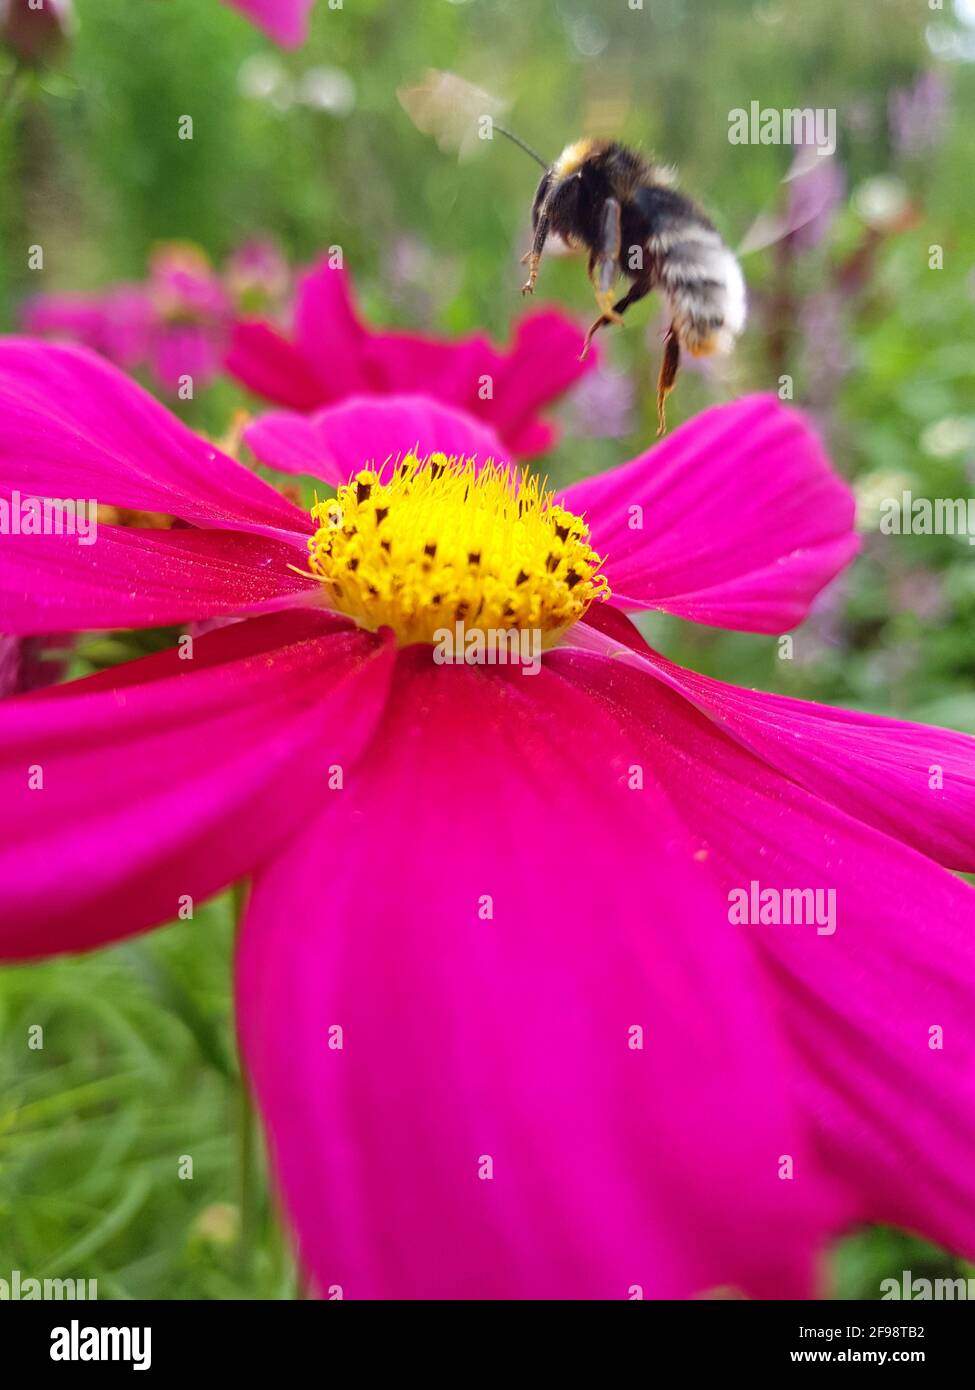 Bumblebee on Cosmea, close-up Stock Photo